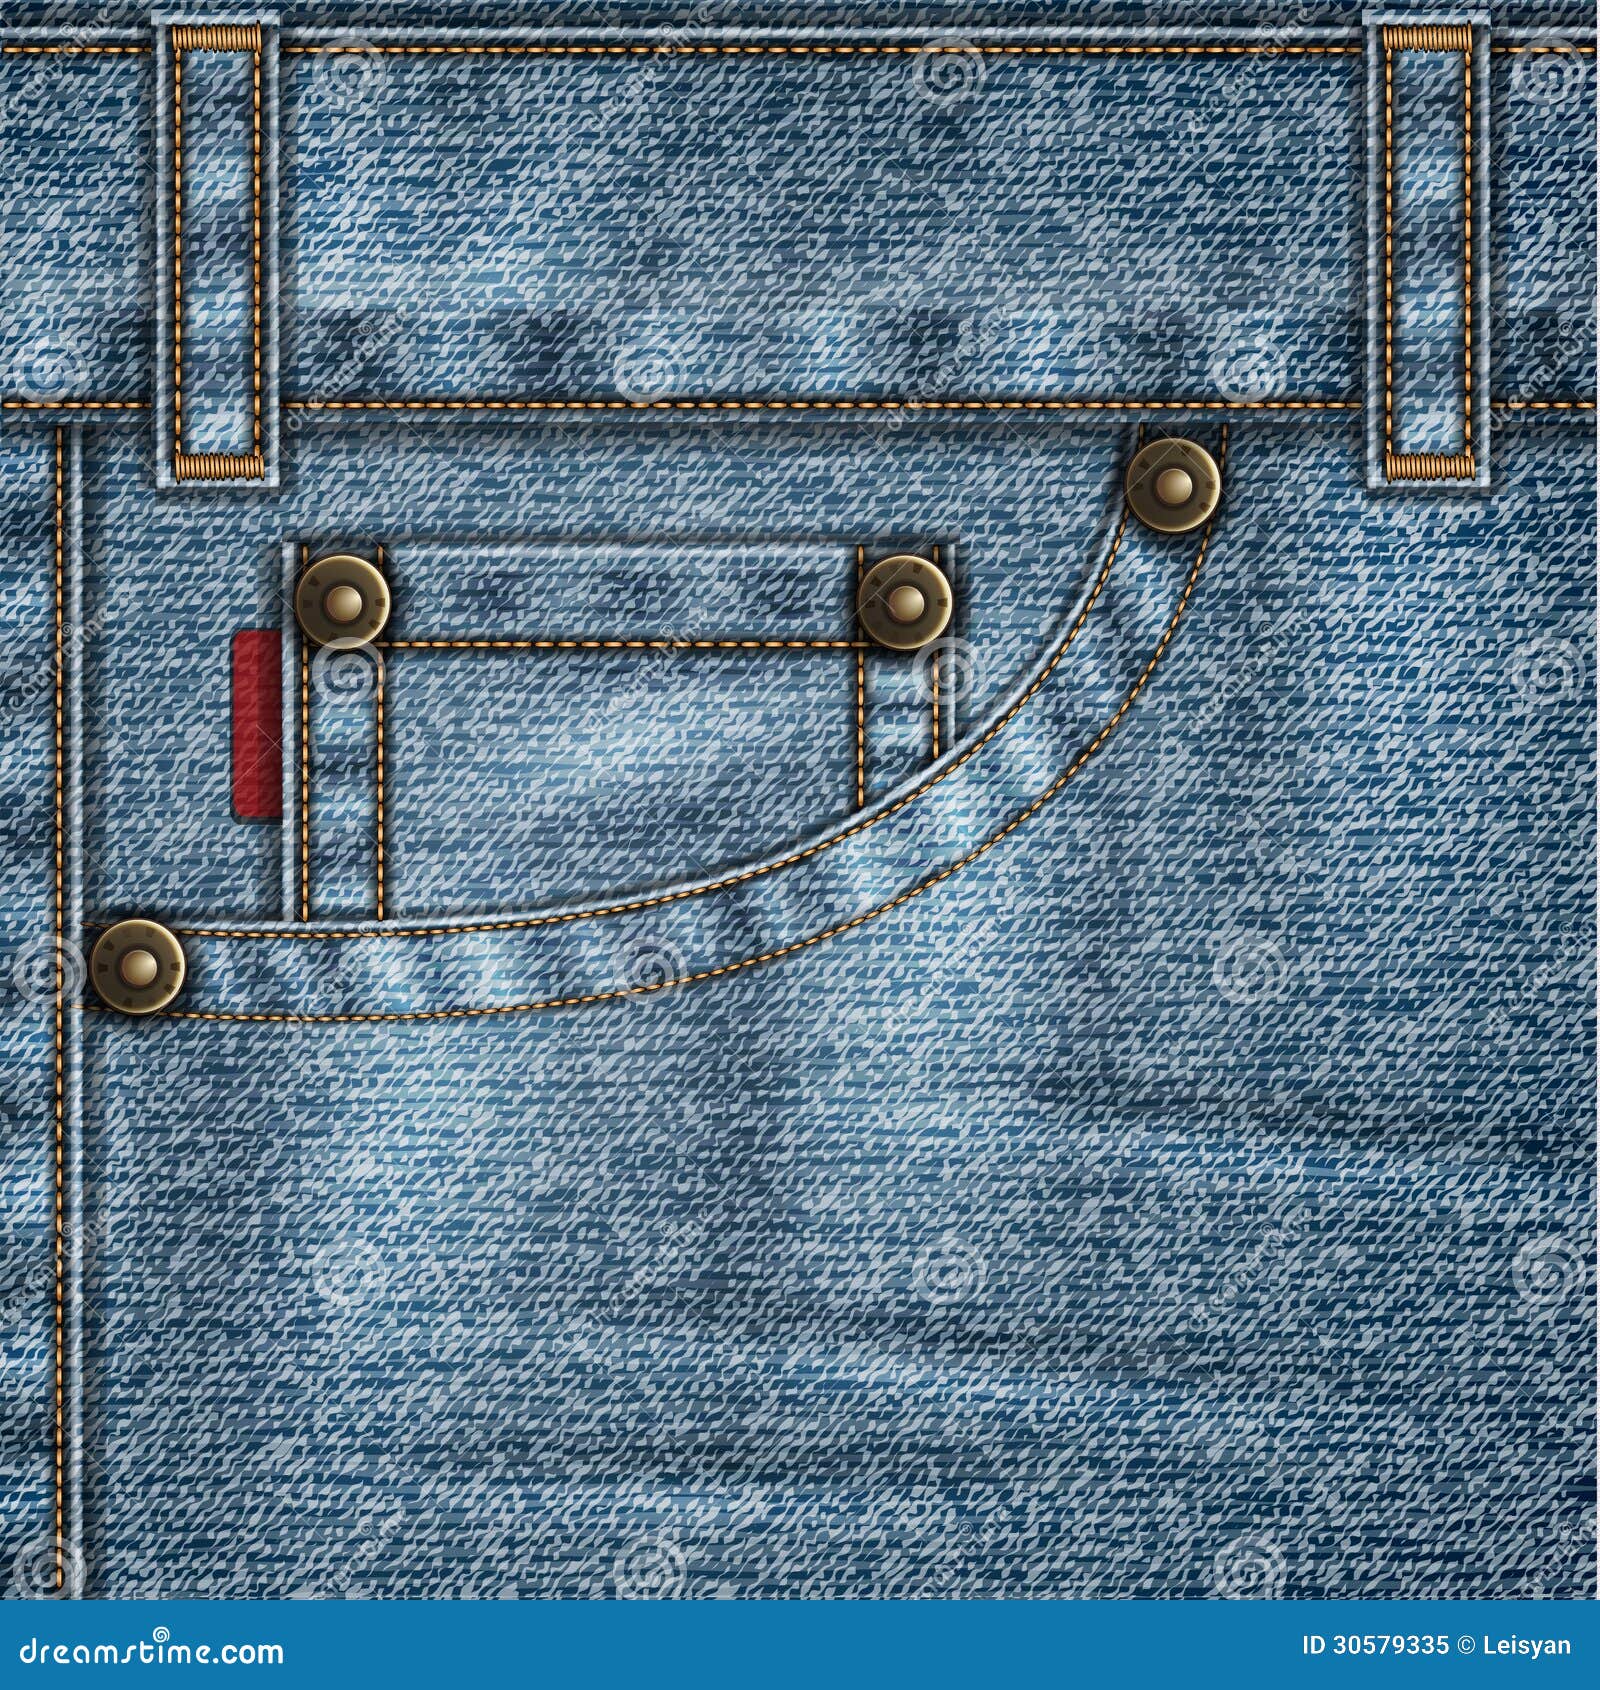 Jeans background stock vector. Illustration of denim - 30579335